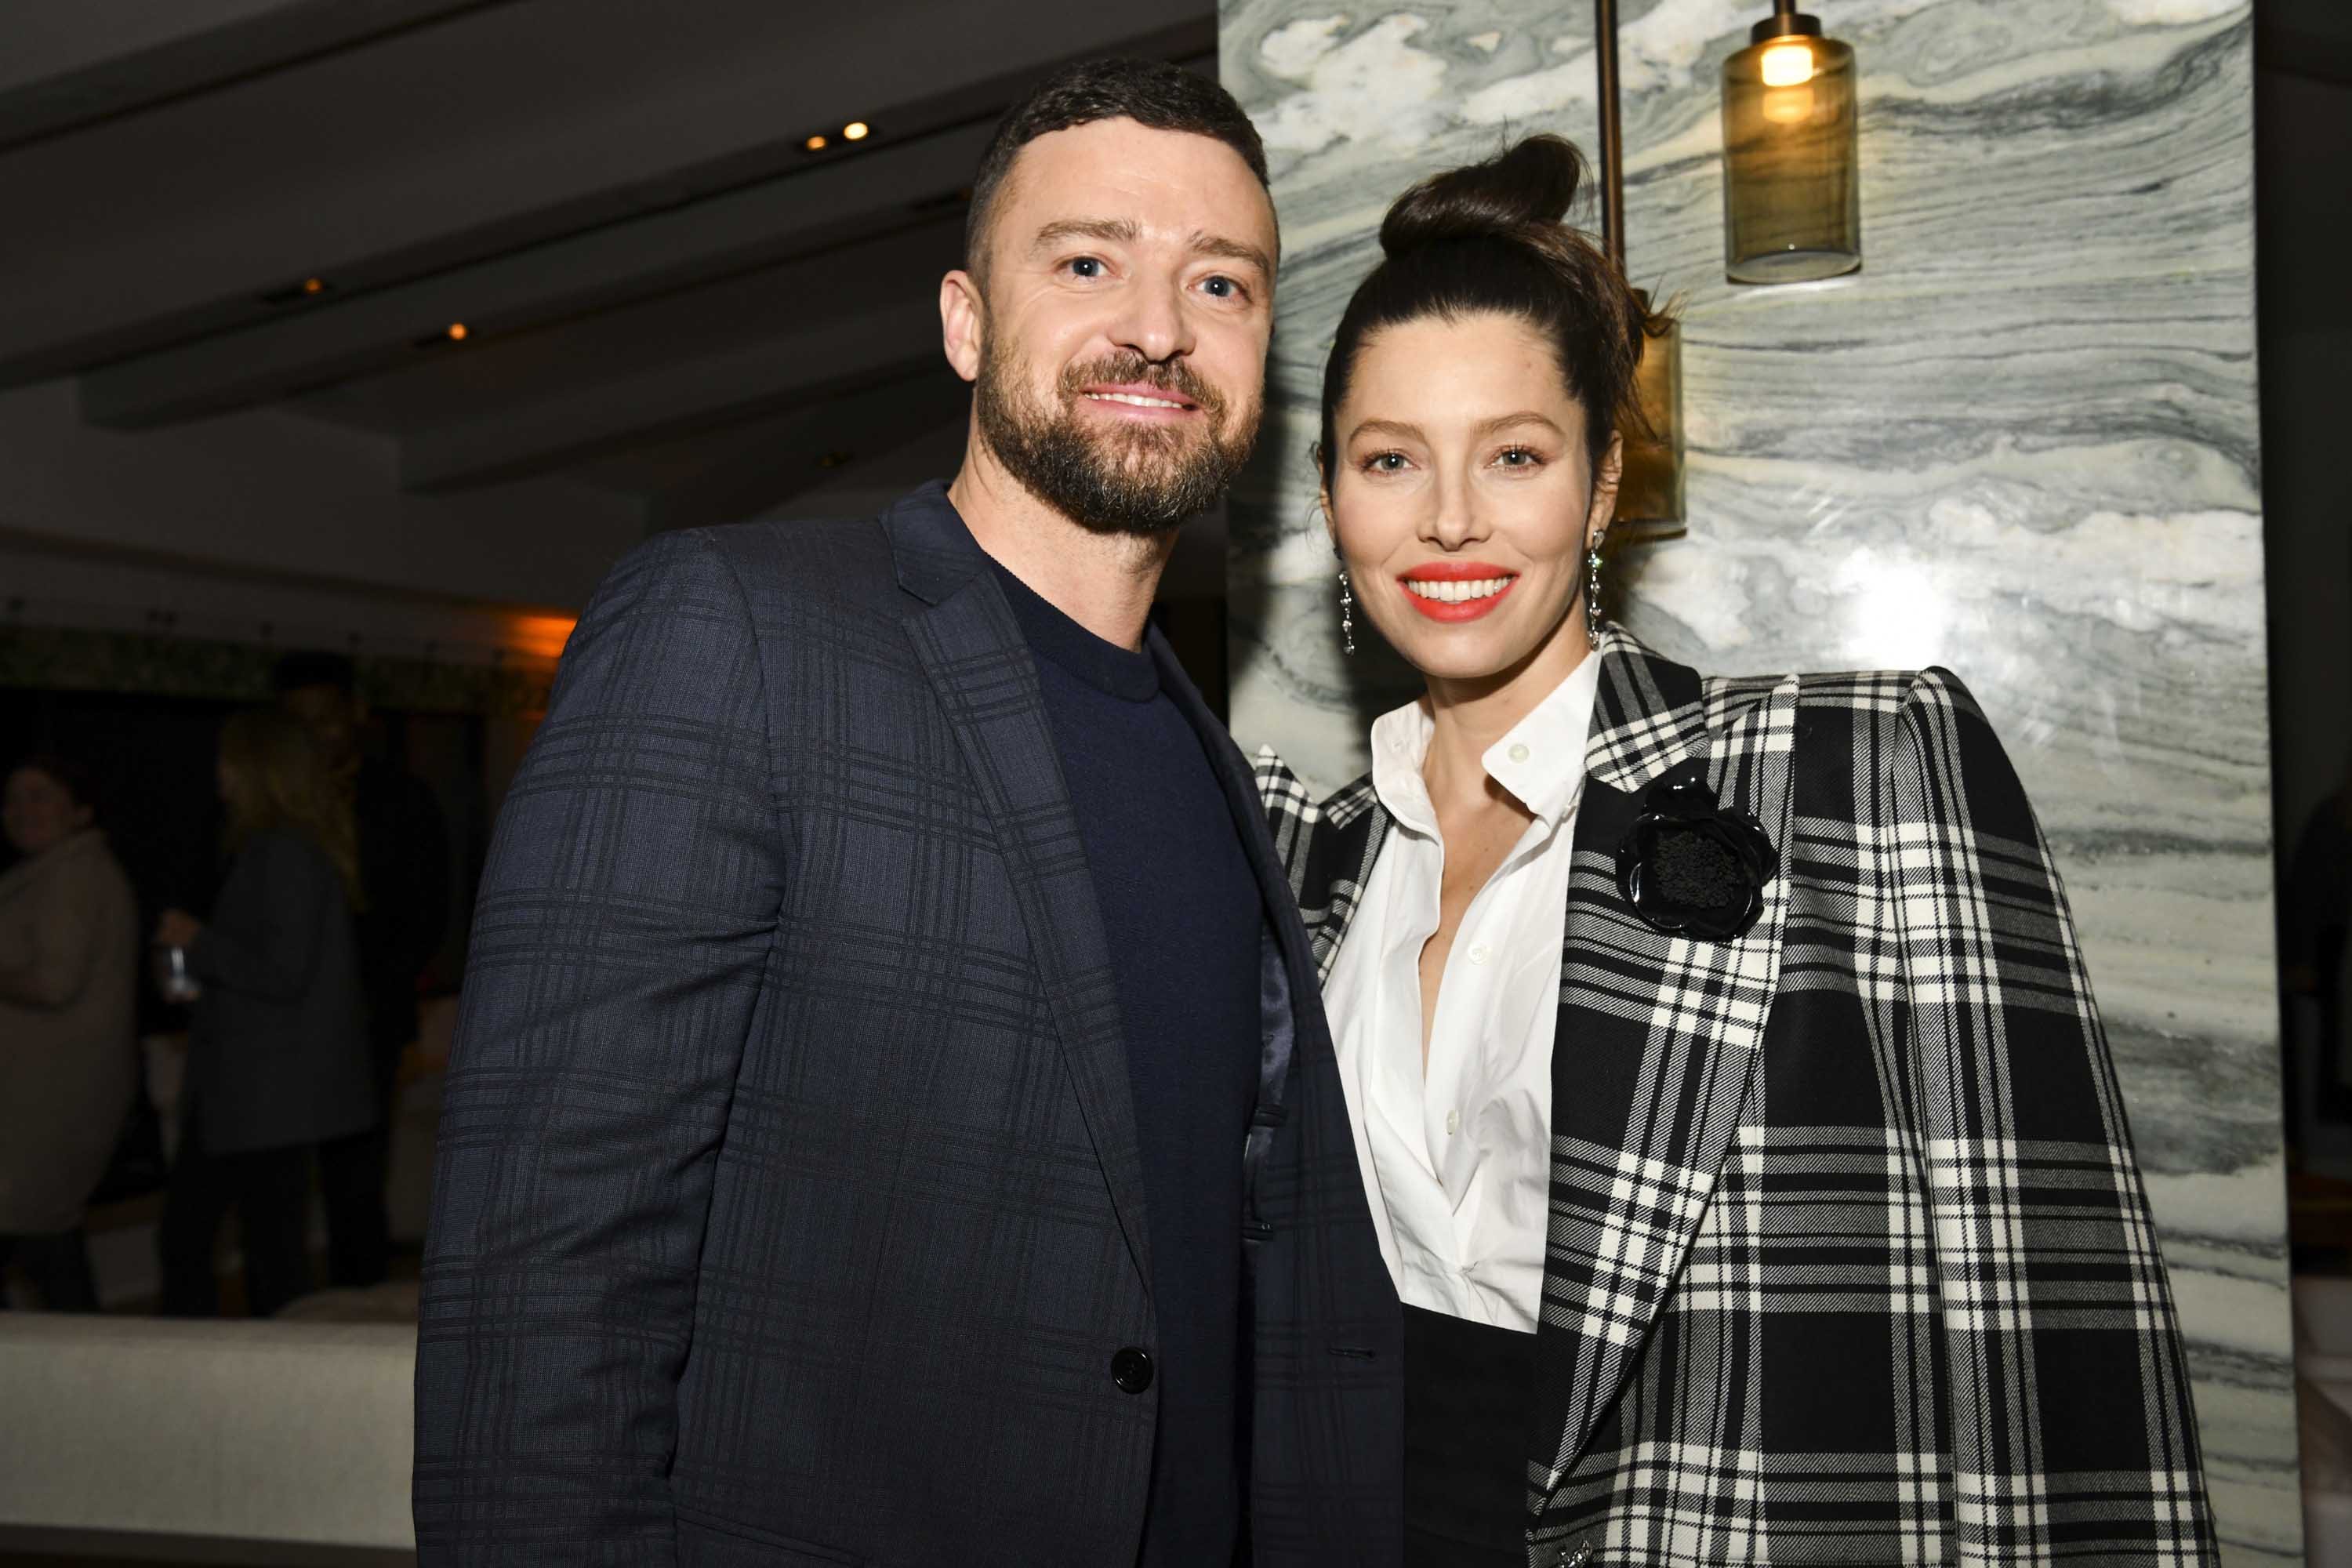 Jessica Biel wishes happy birthday to husband Justin Timberlake